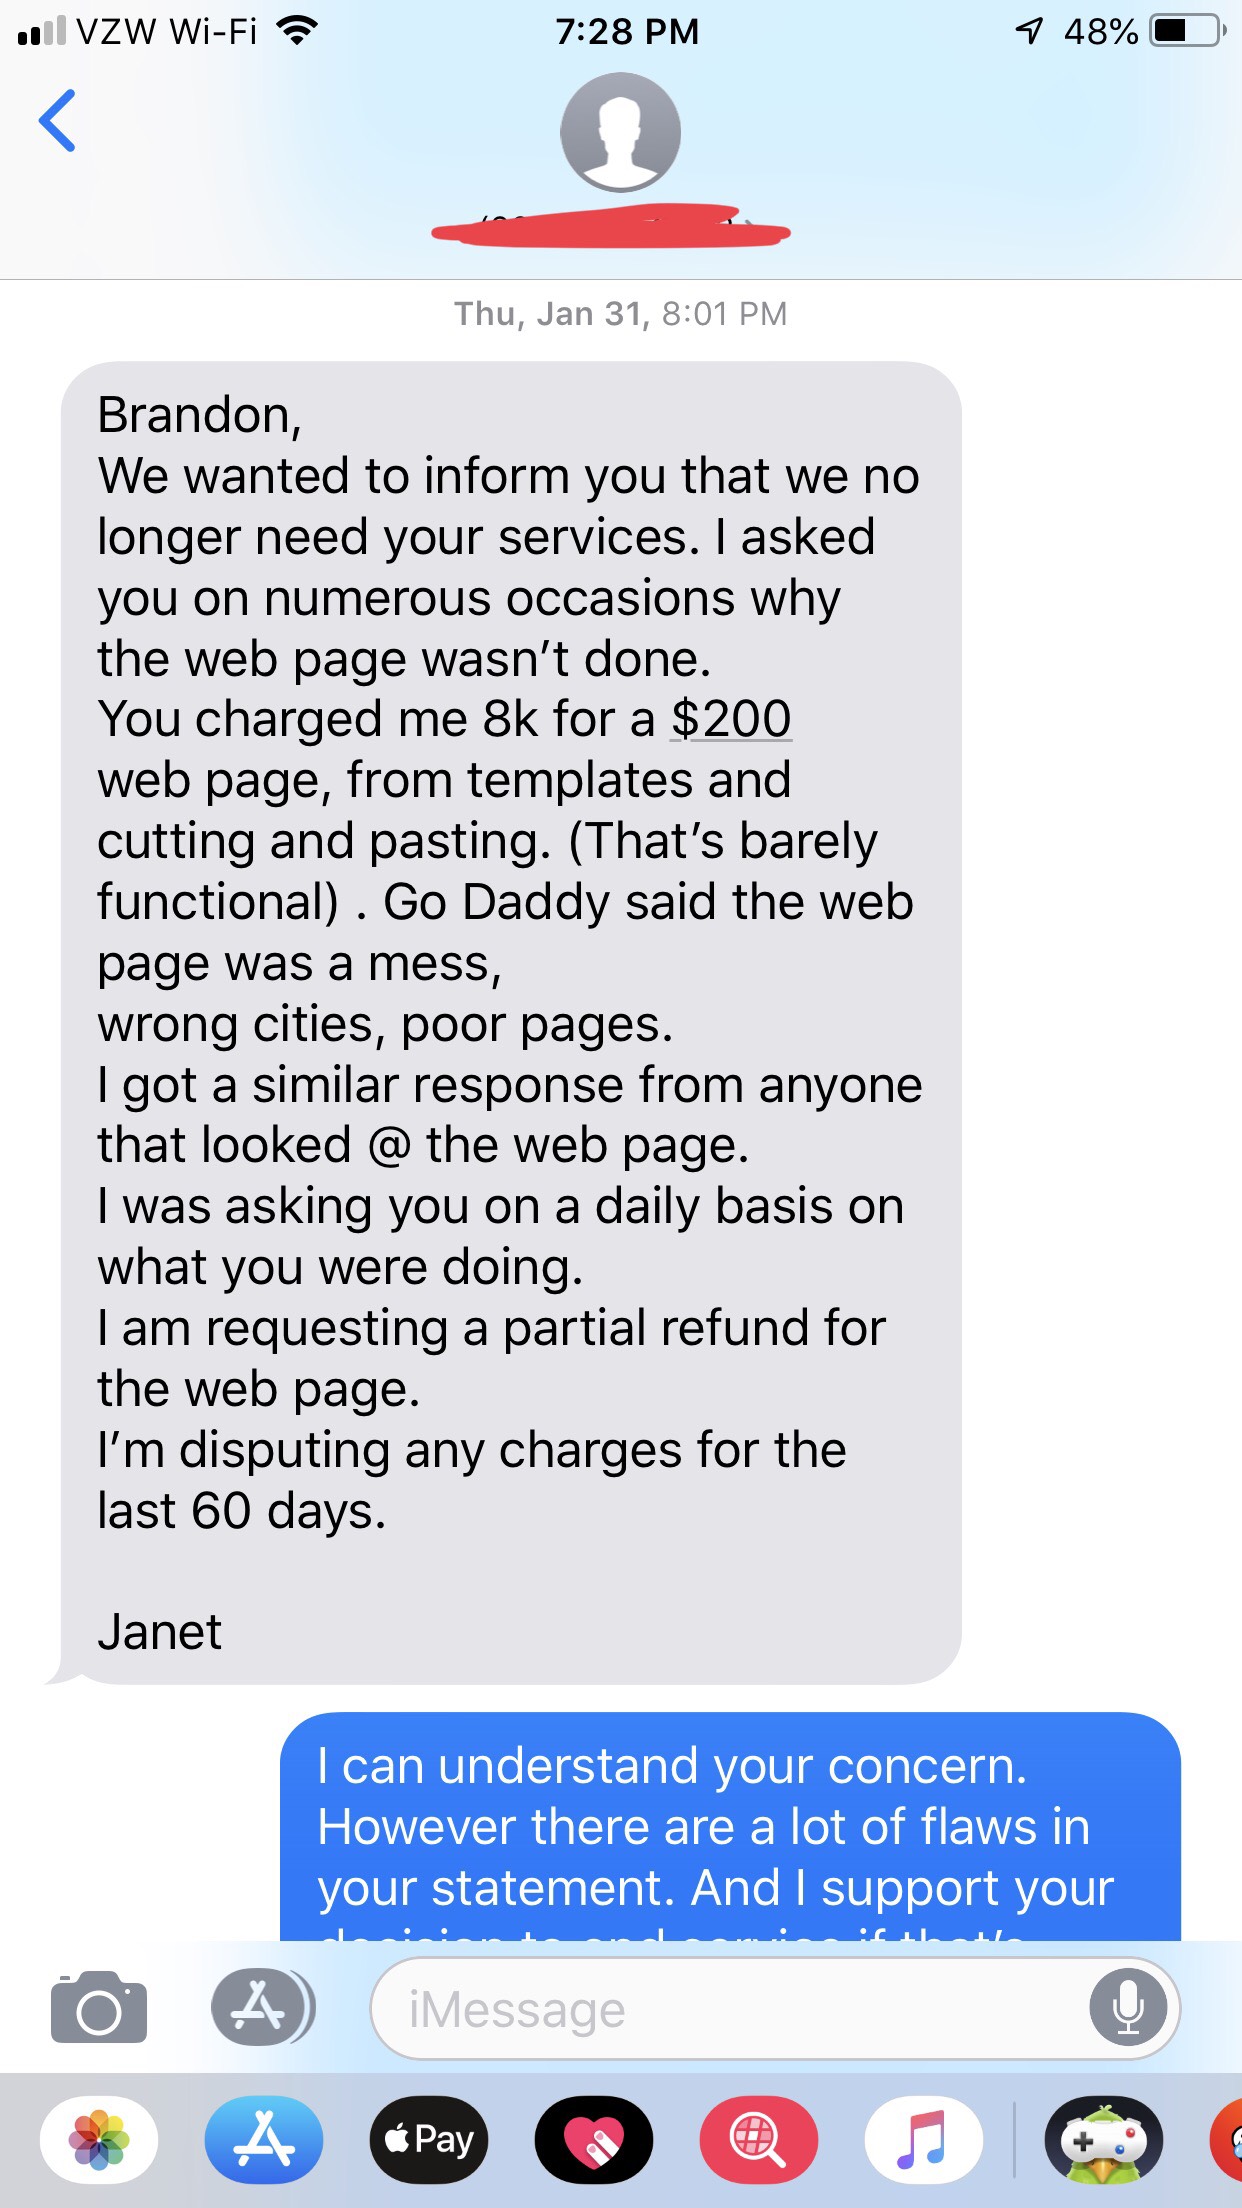 Janet Making False Claims then Frauding us